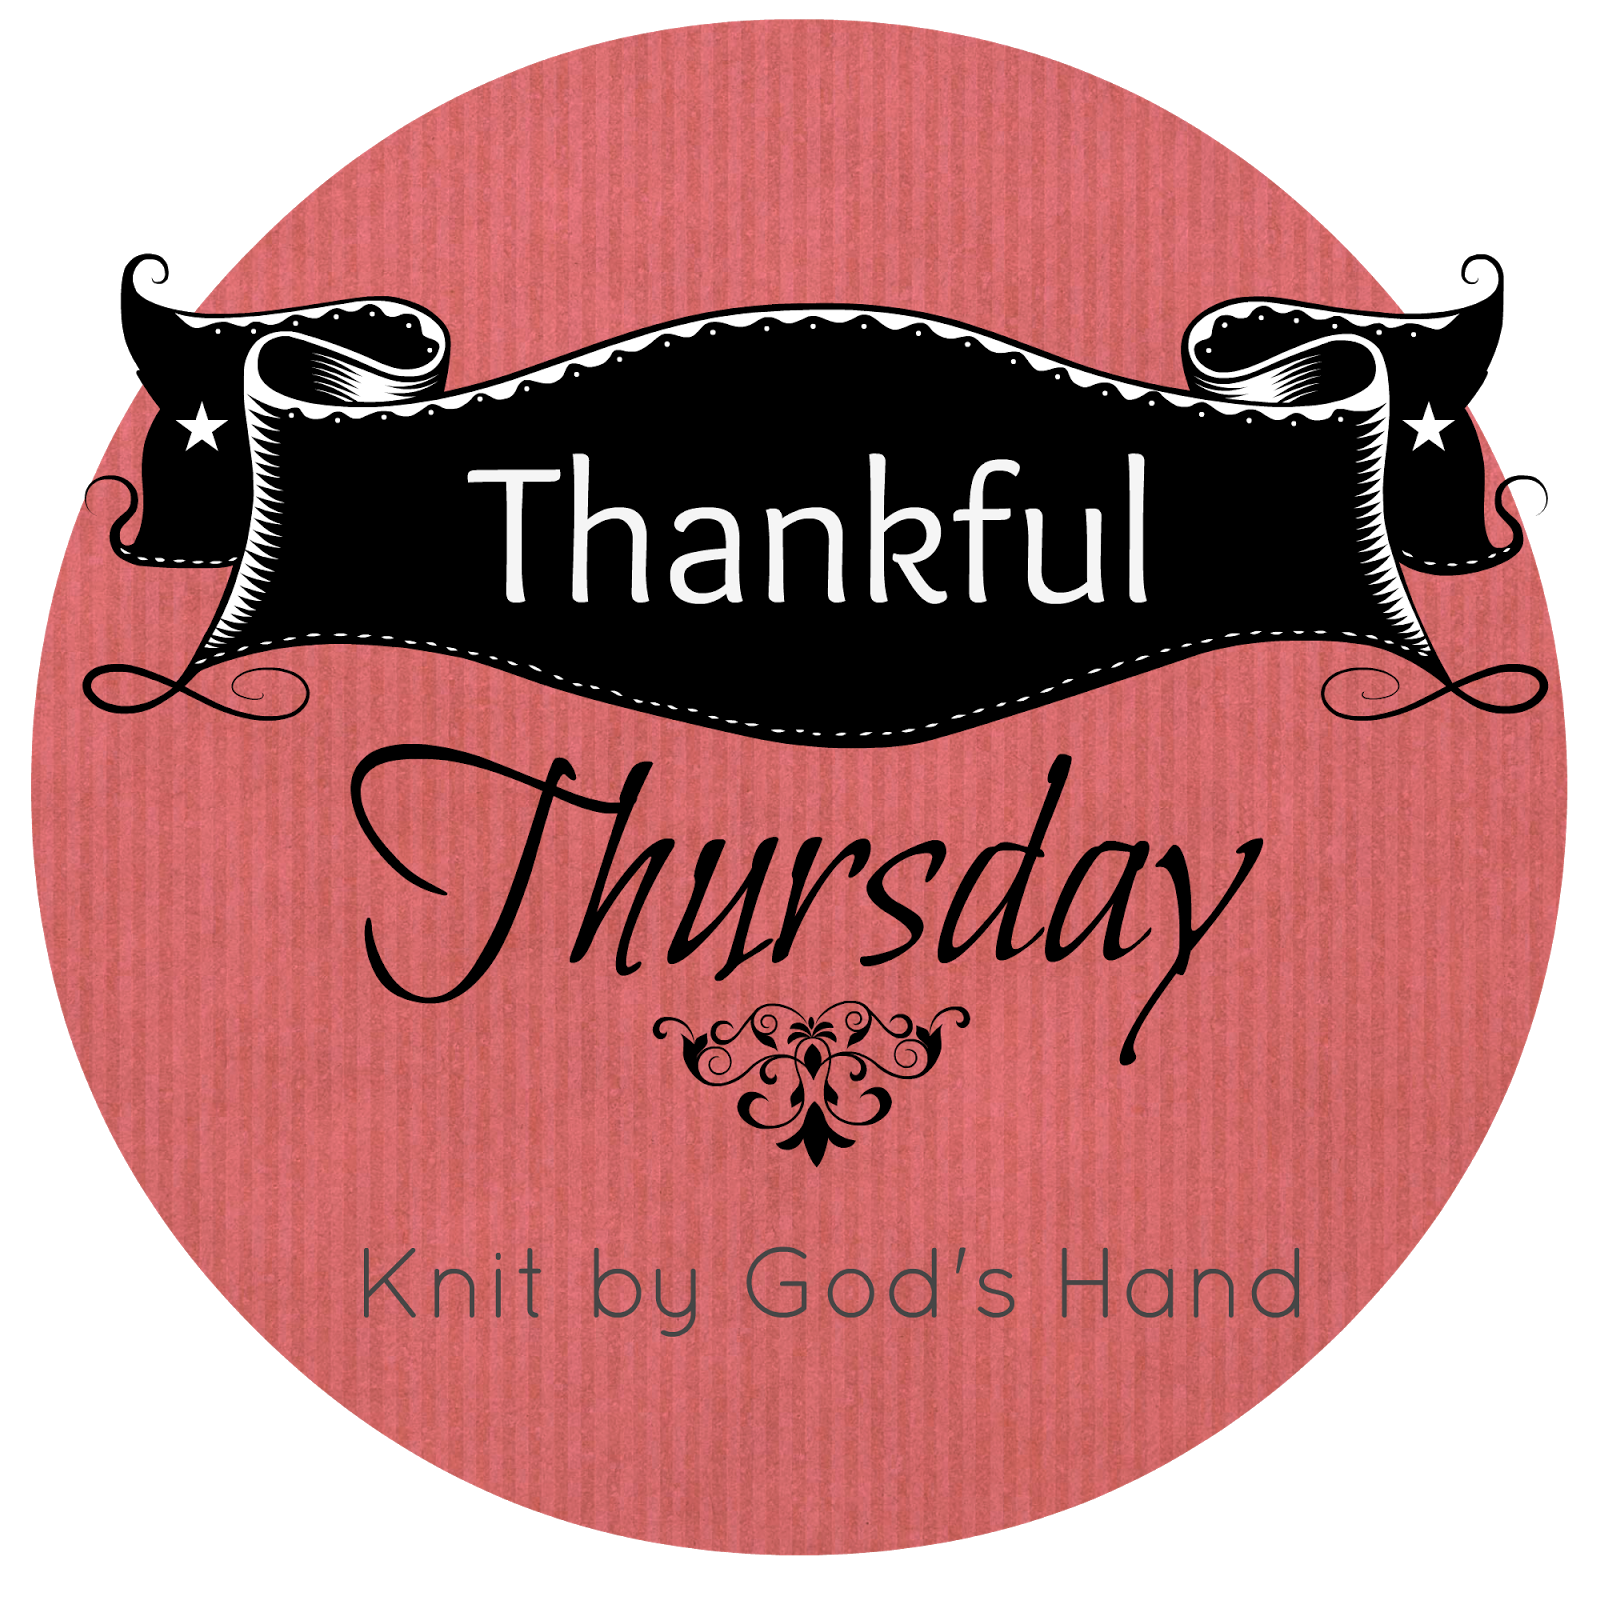 http://www.knitbygodshand.com/2015/01/thankful-thursday-3.html